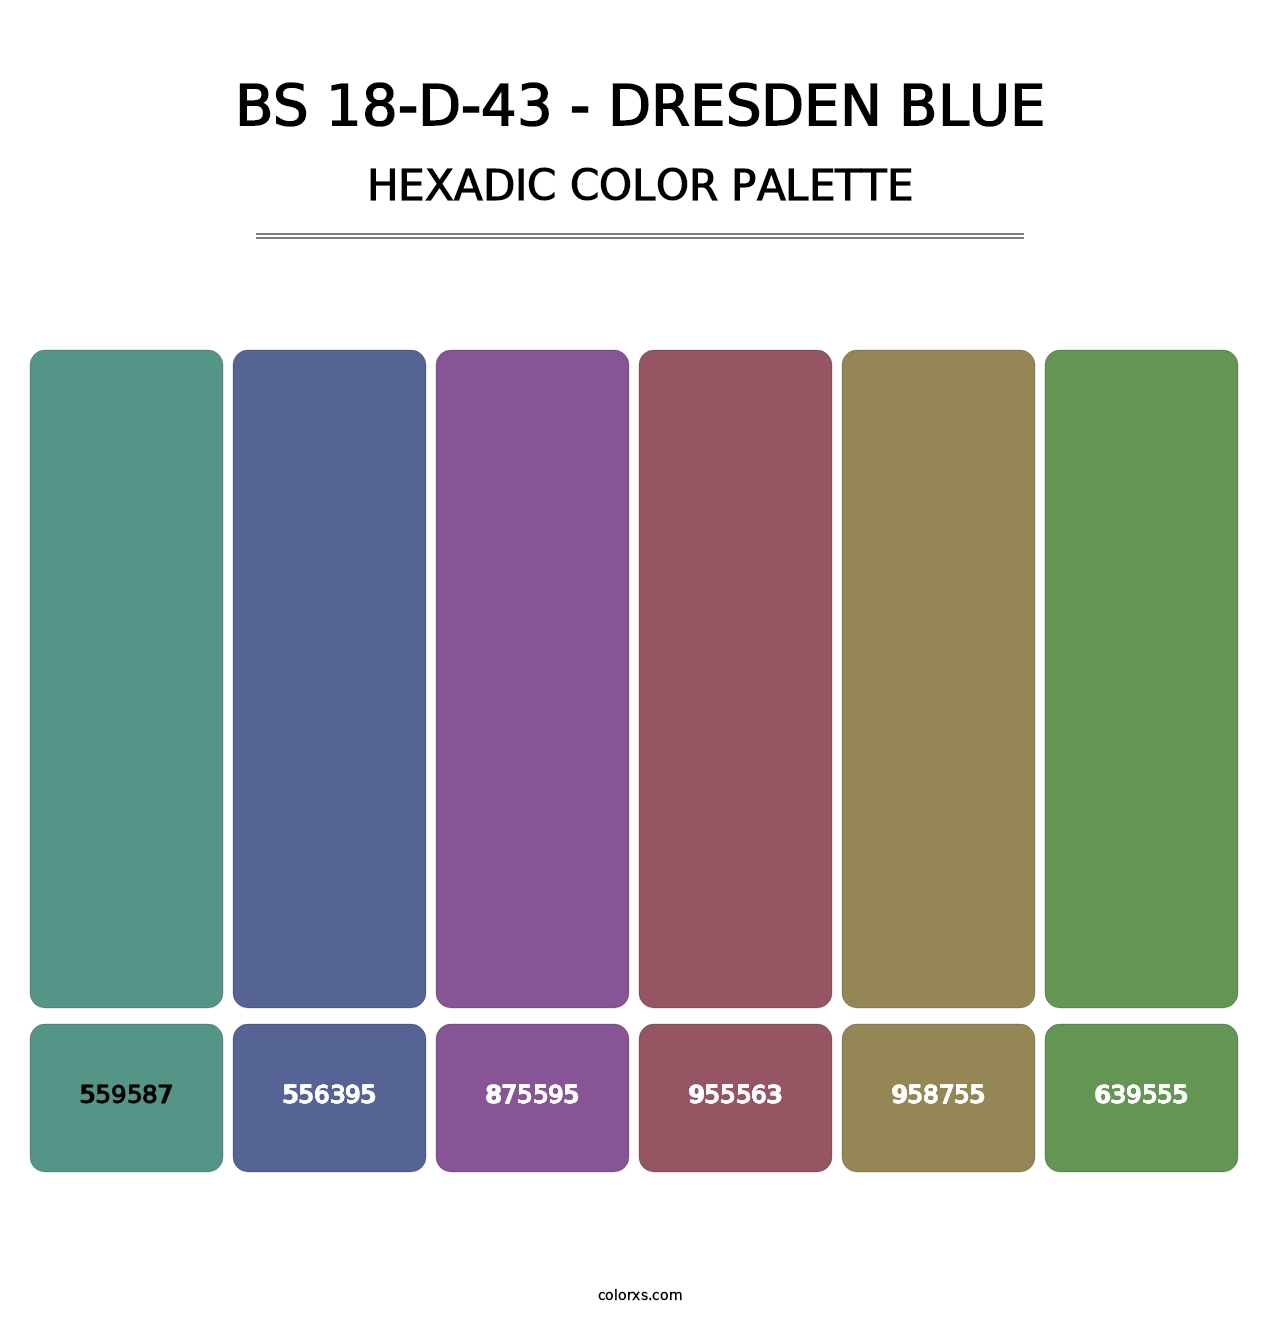 BS 18-D-43 - Dresden Blue - Hexadic Color Palette